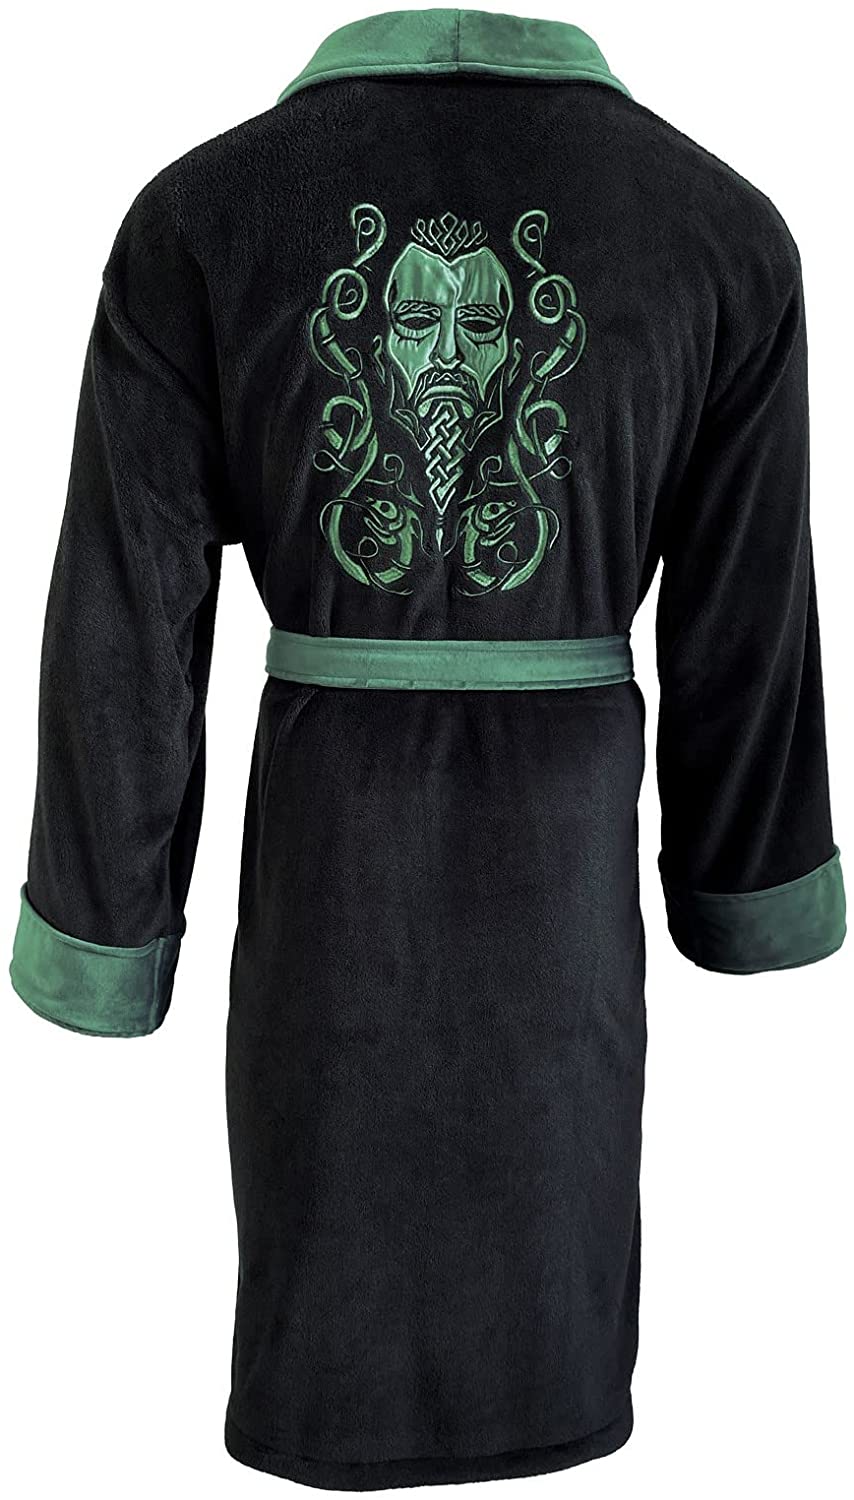 Groovy Assasins Creed Eivor Black/Green Bathrobe Men's Dressing Gown Robe Official, One Size